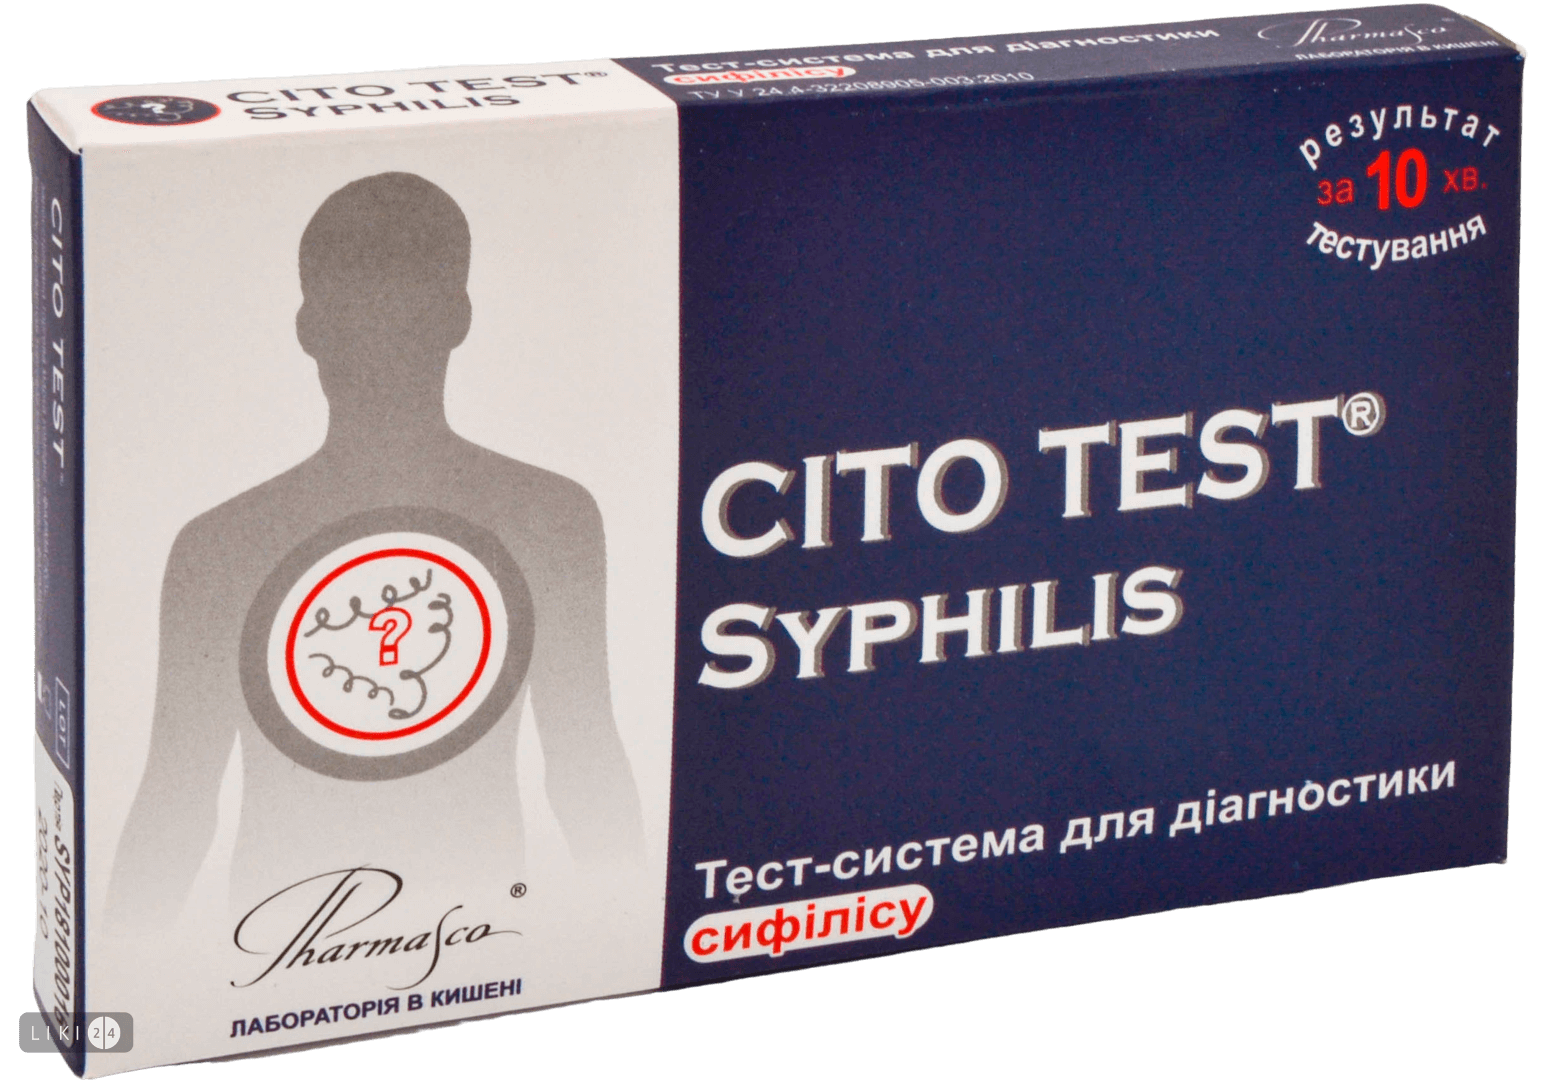 

Cito test syphilis тест-система для діагностики сифілісу тест, тест